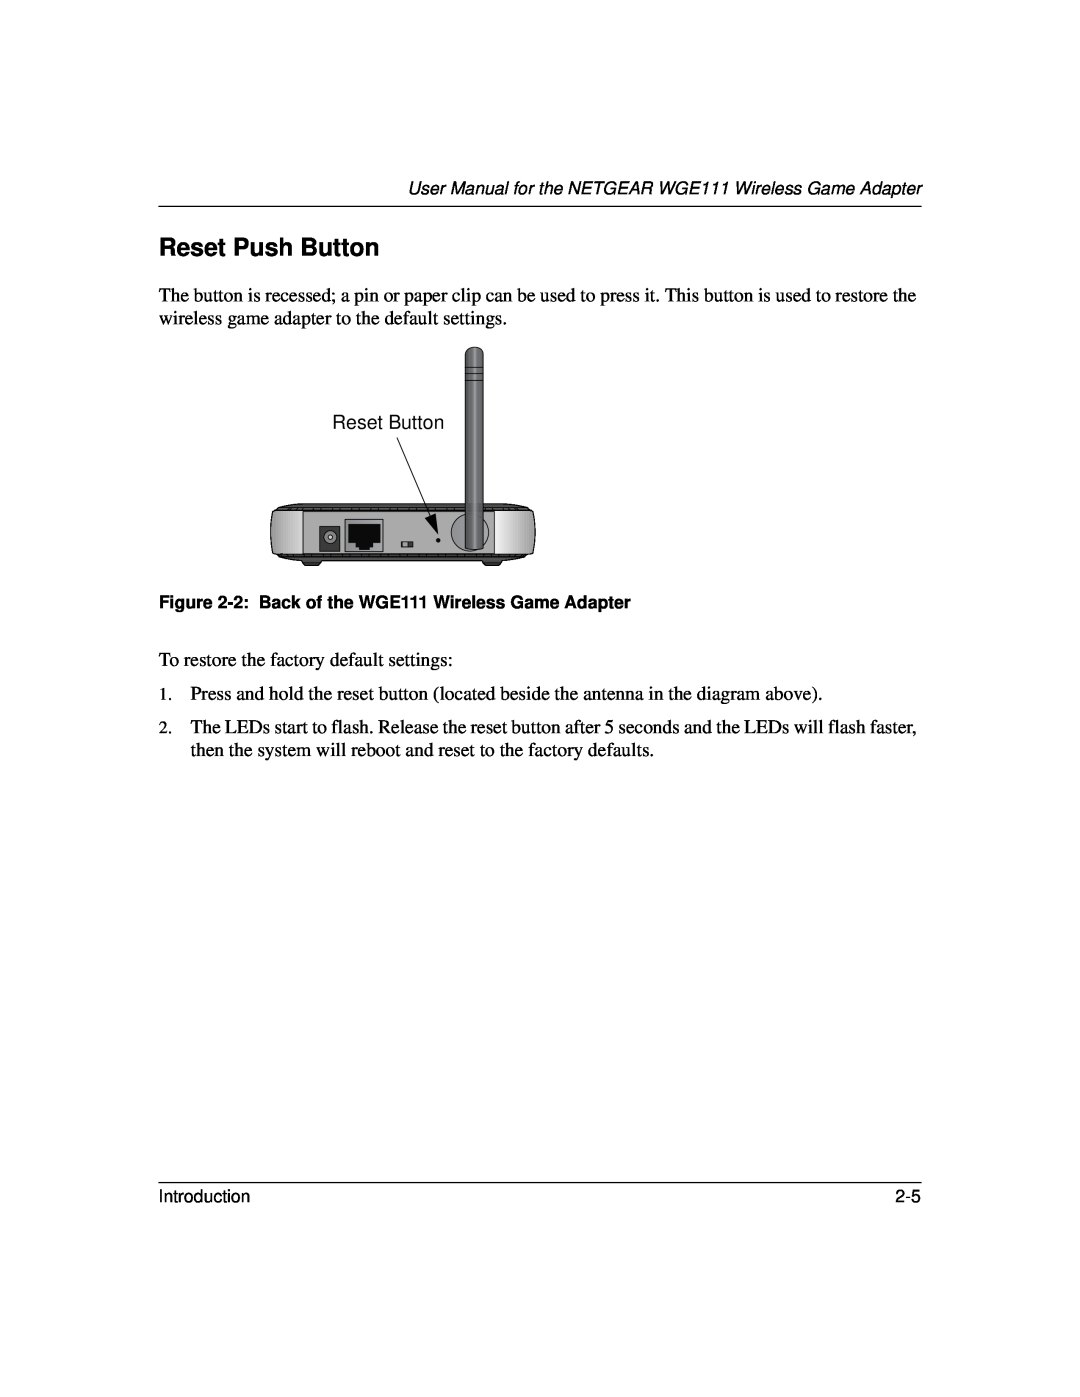 NETGEAR WGE111 user manual Reset Push Button 